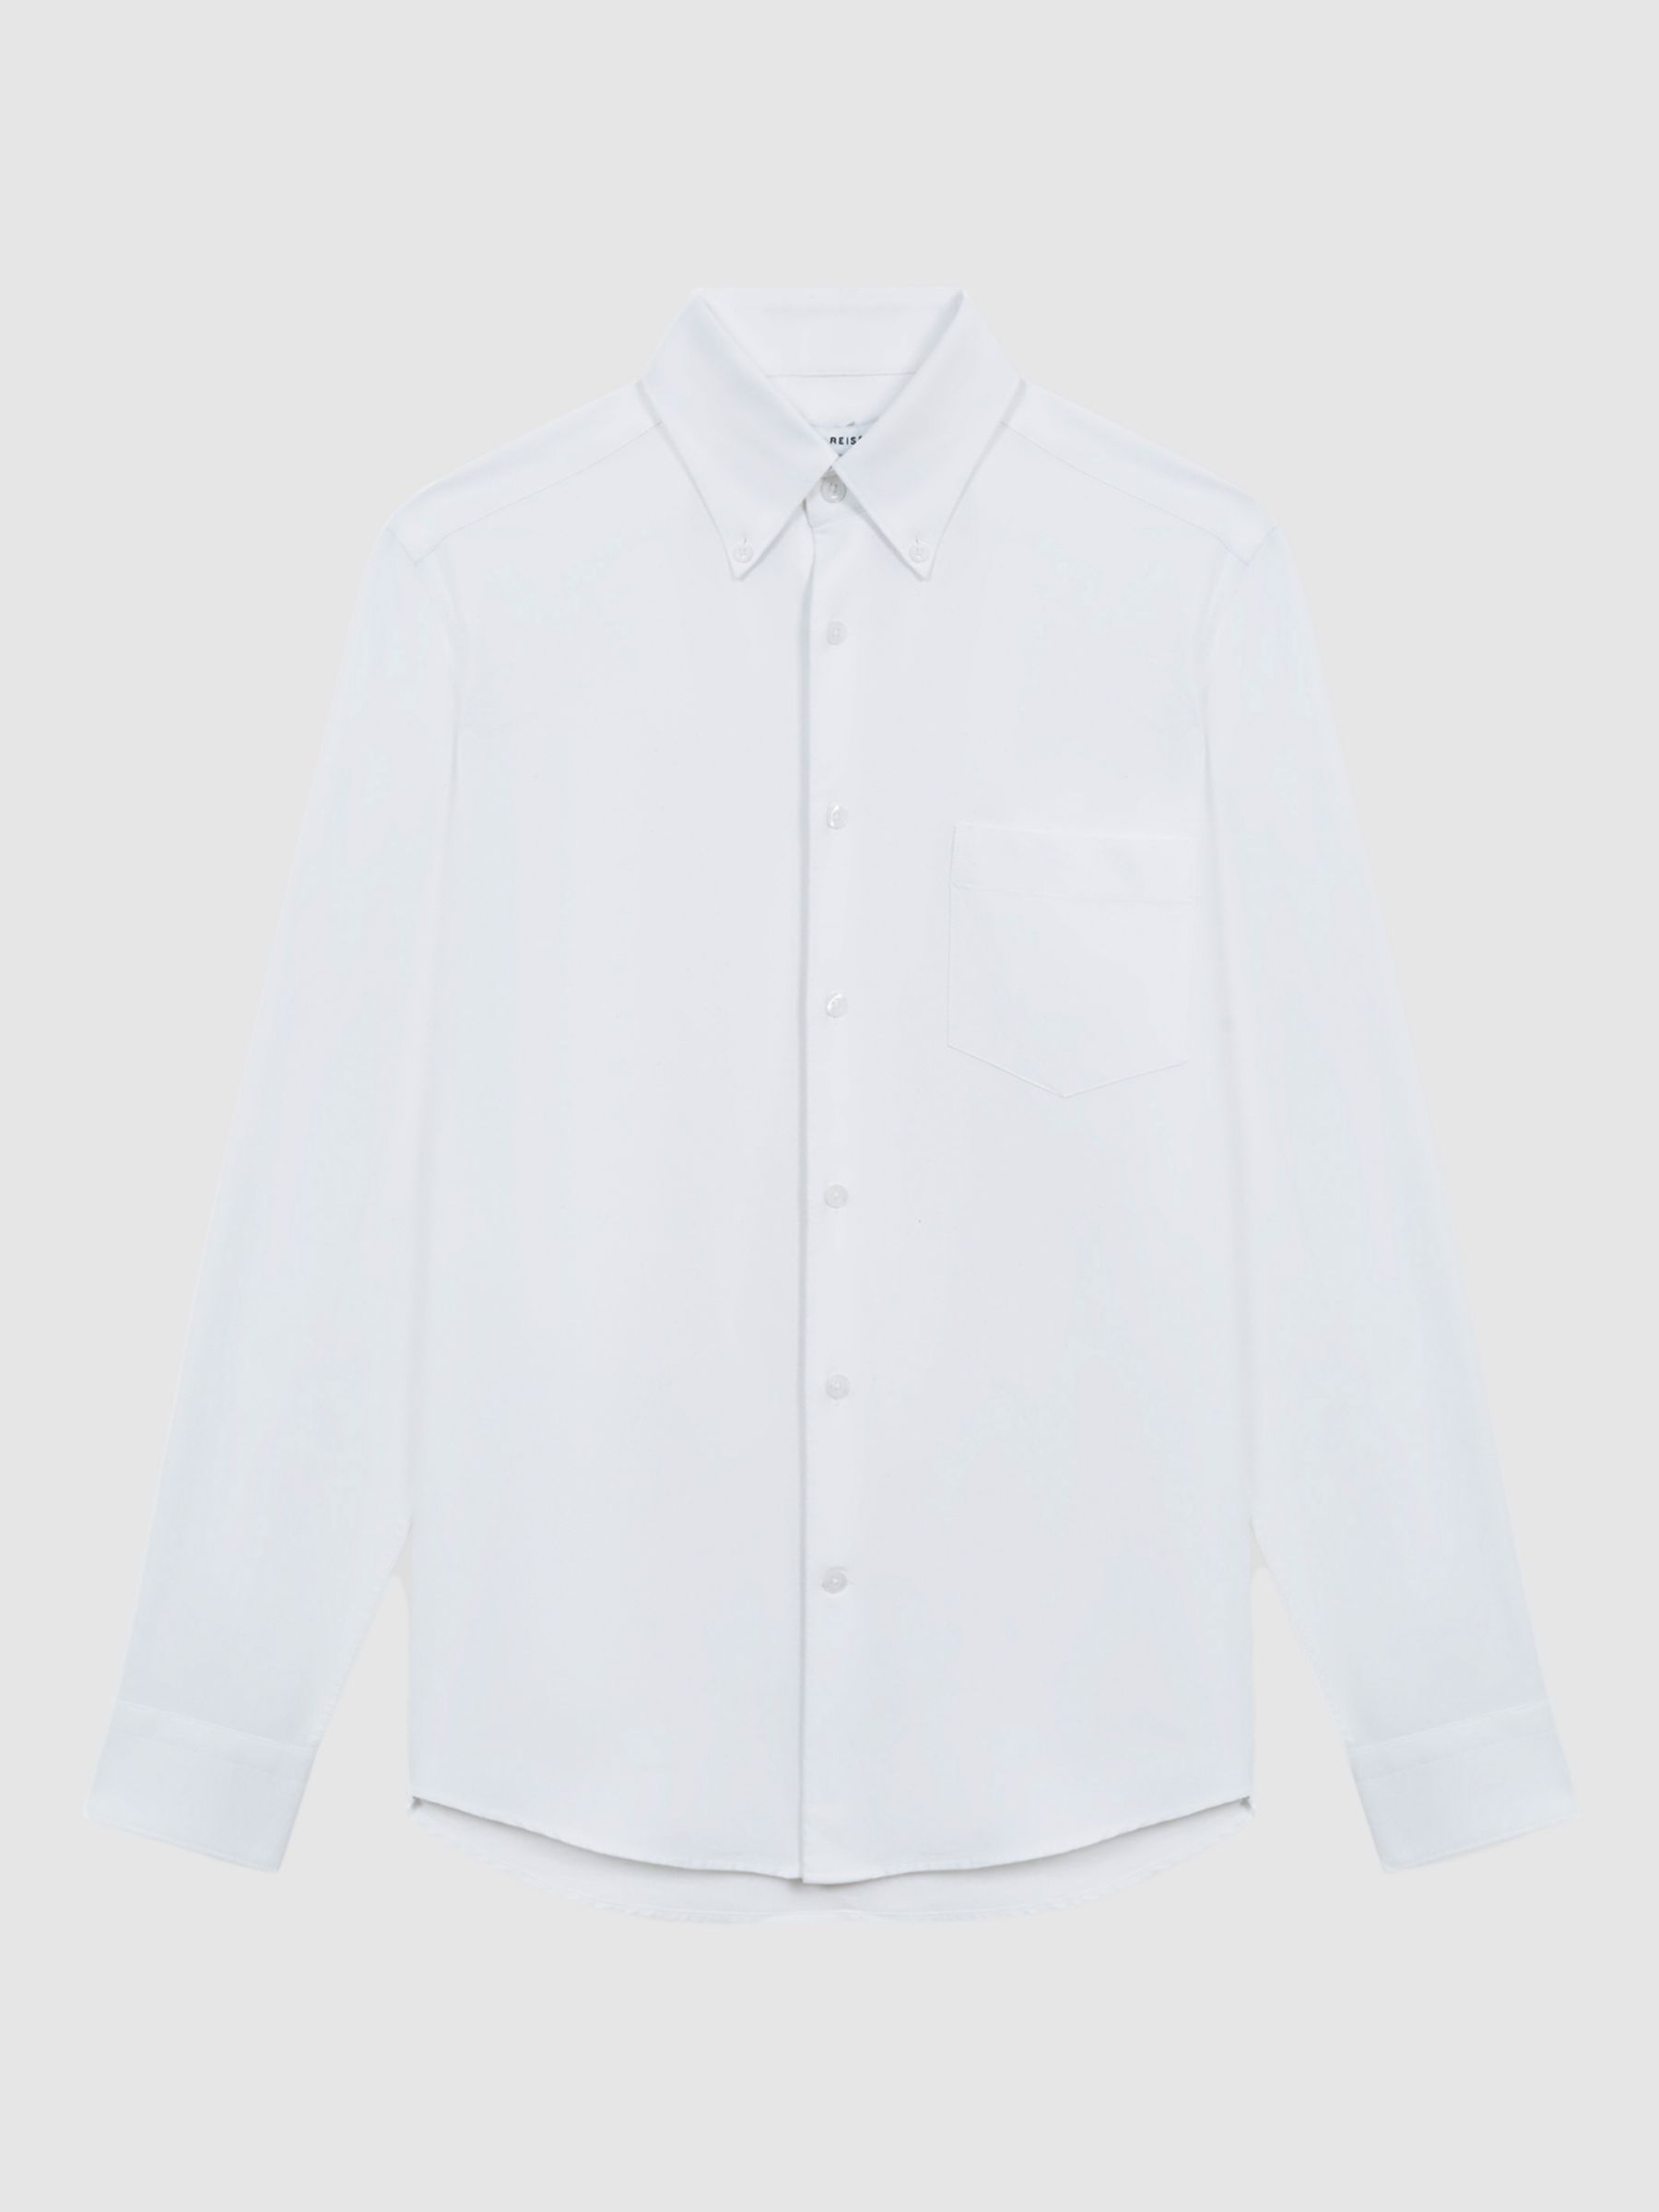 Reiss Greenwich Long Sleeve Oxford Shirt, White, XS